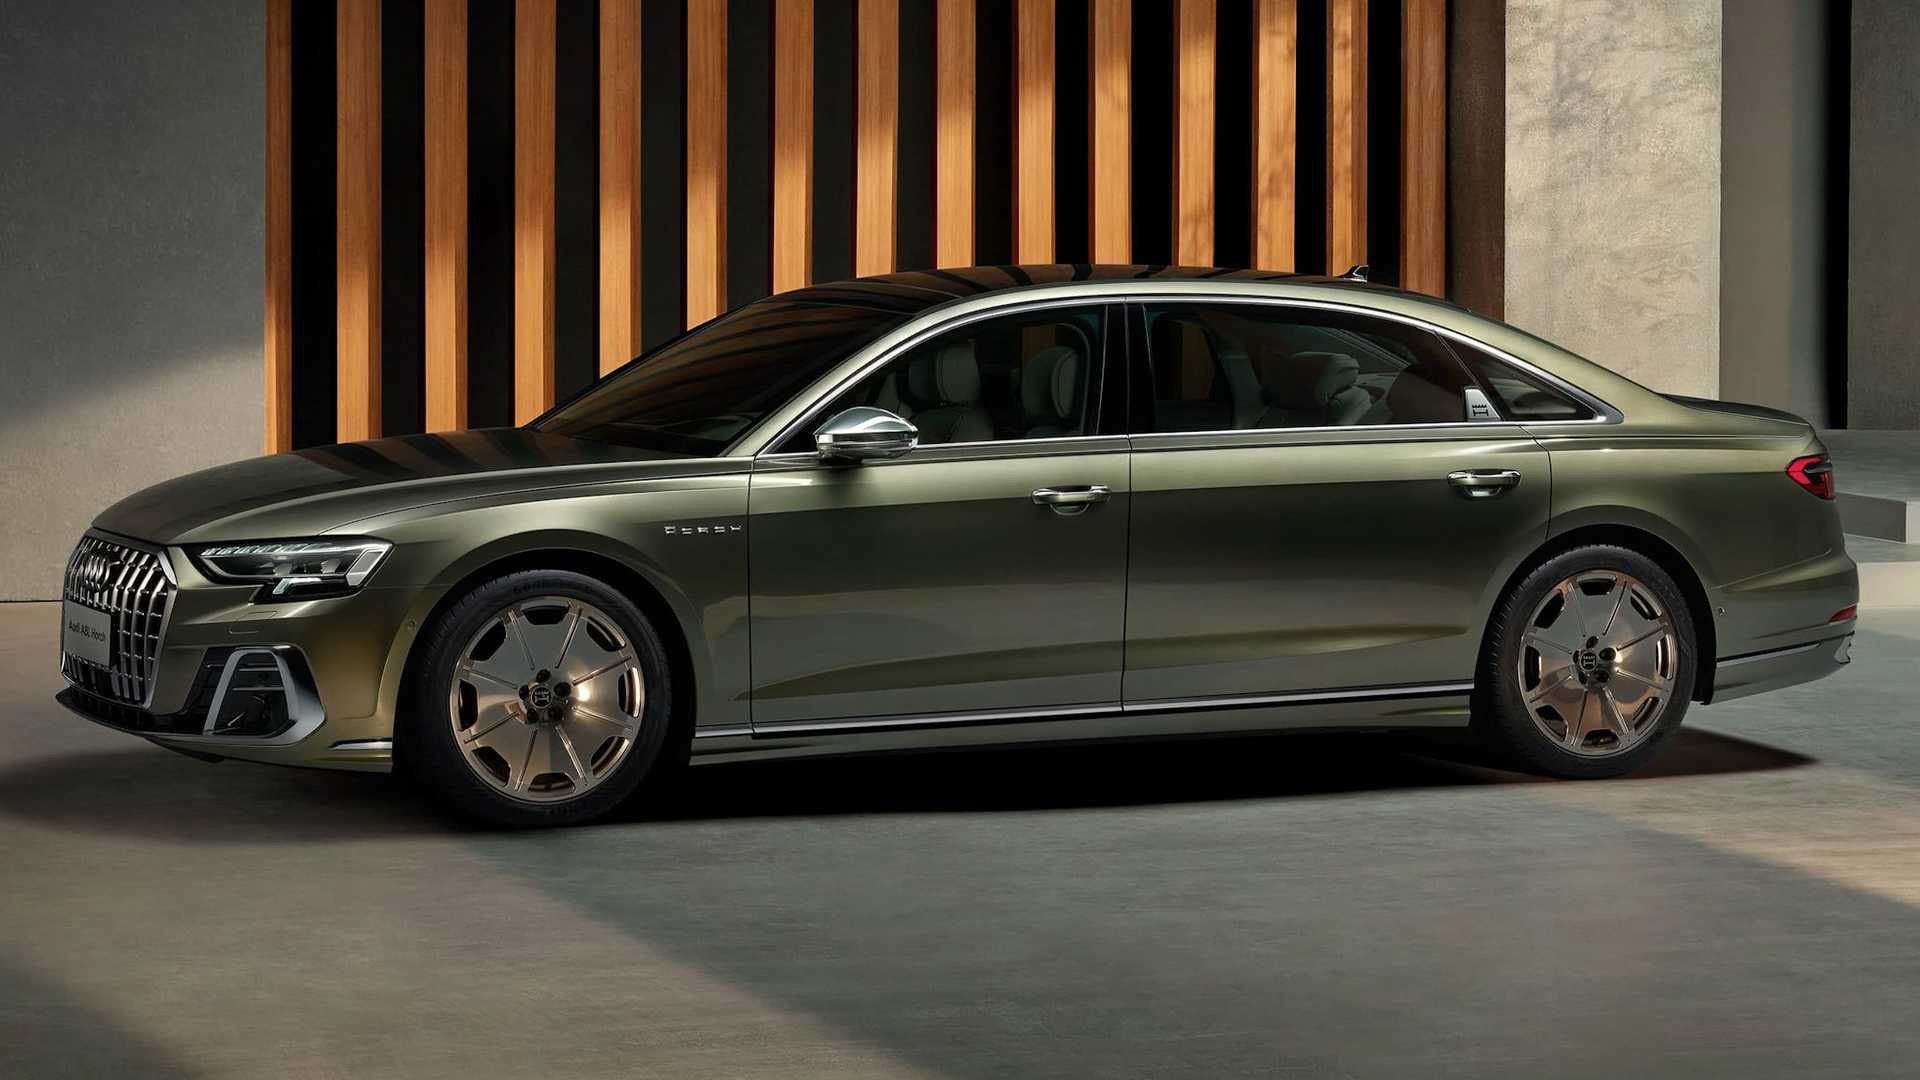 The 2022 Audi A8 L Horch